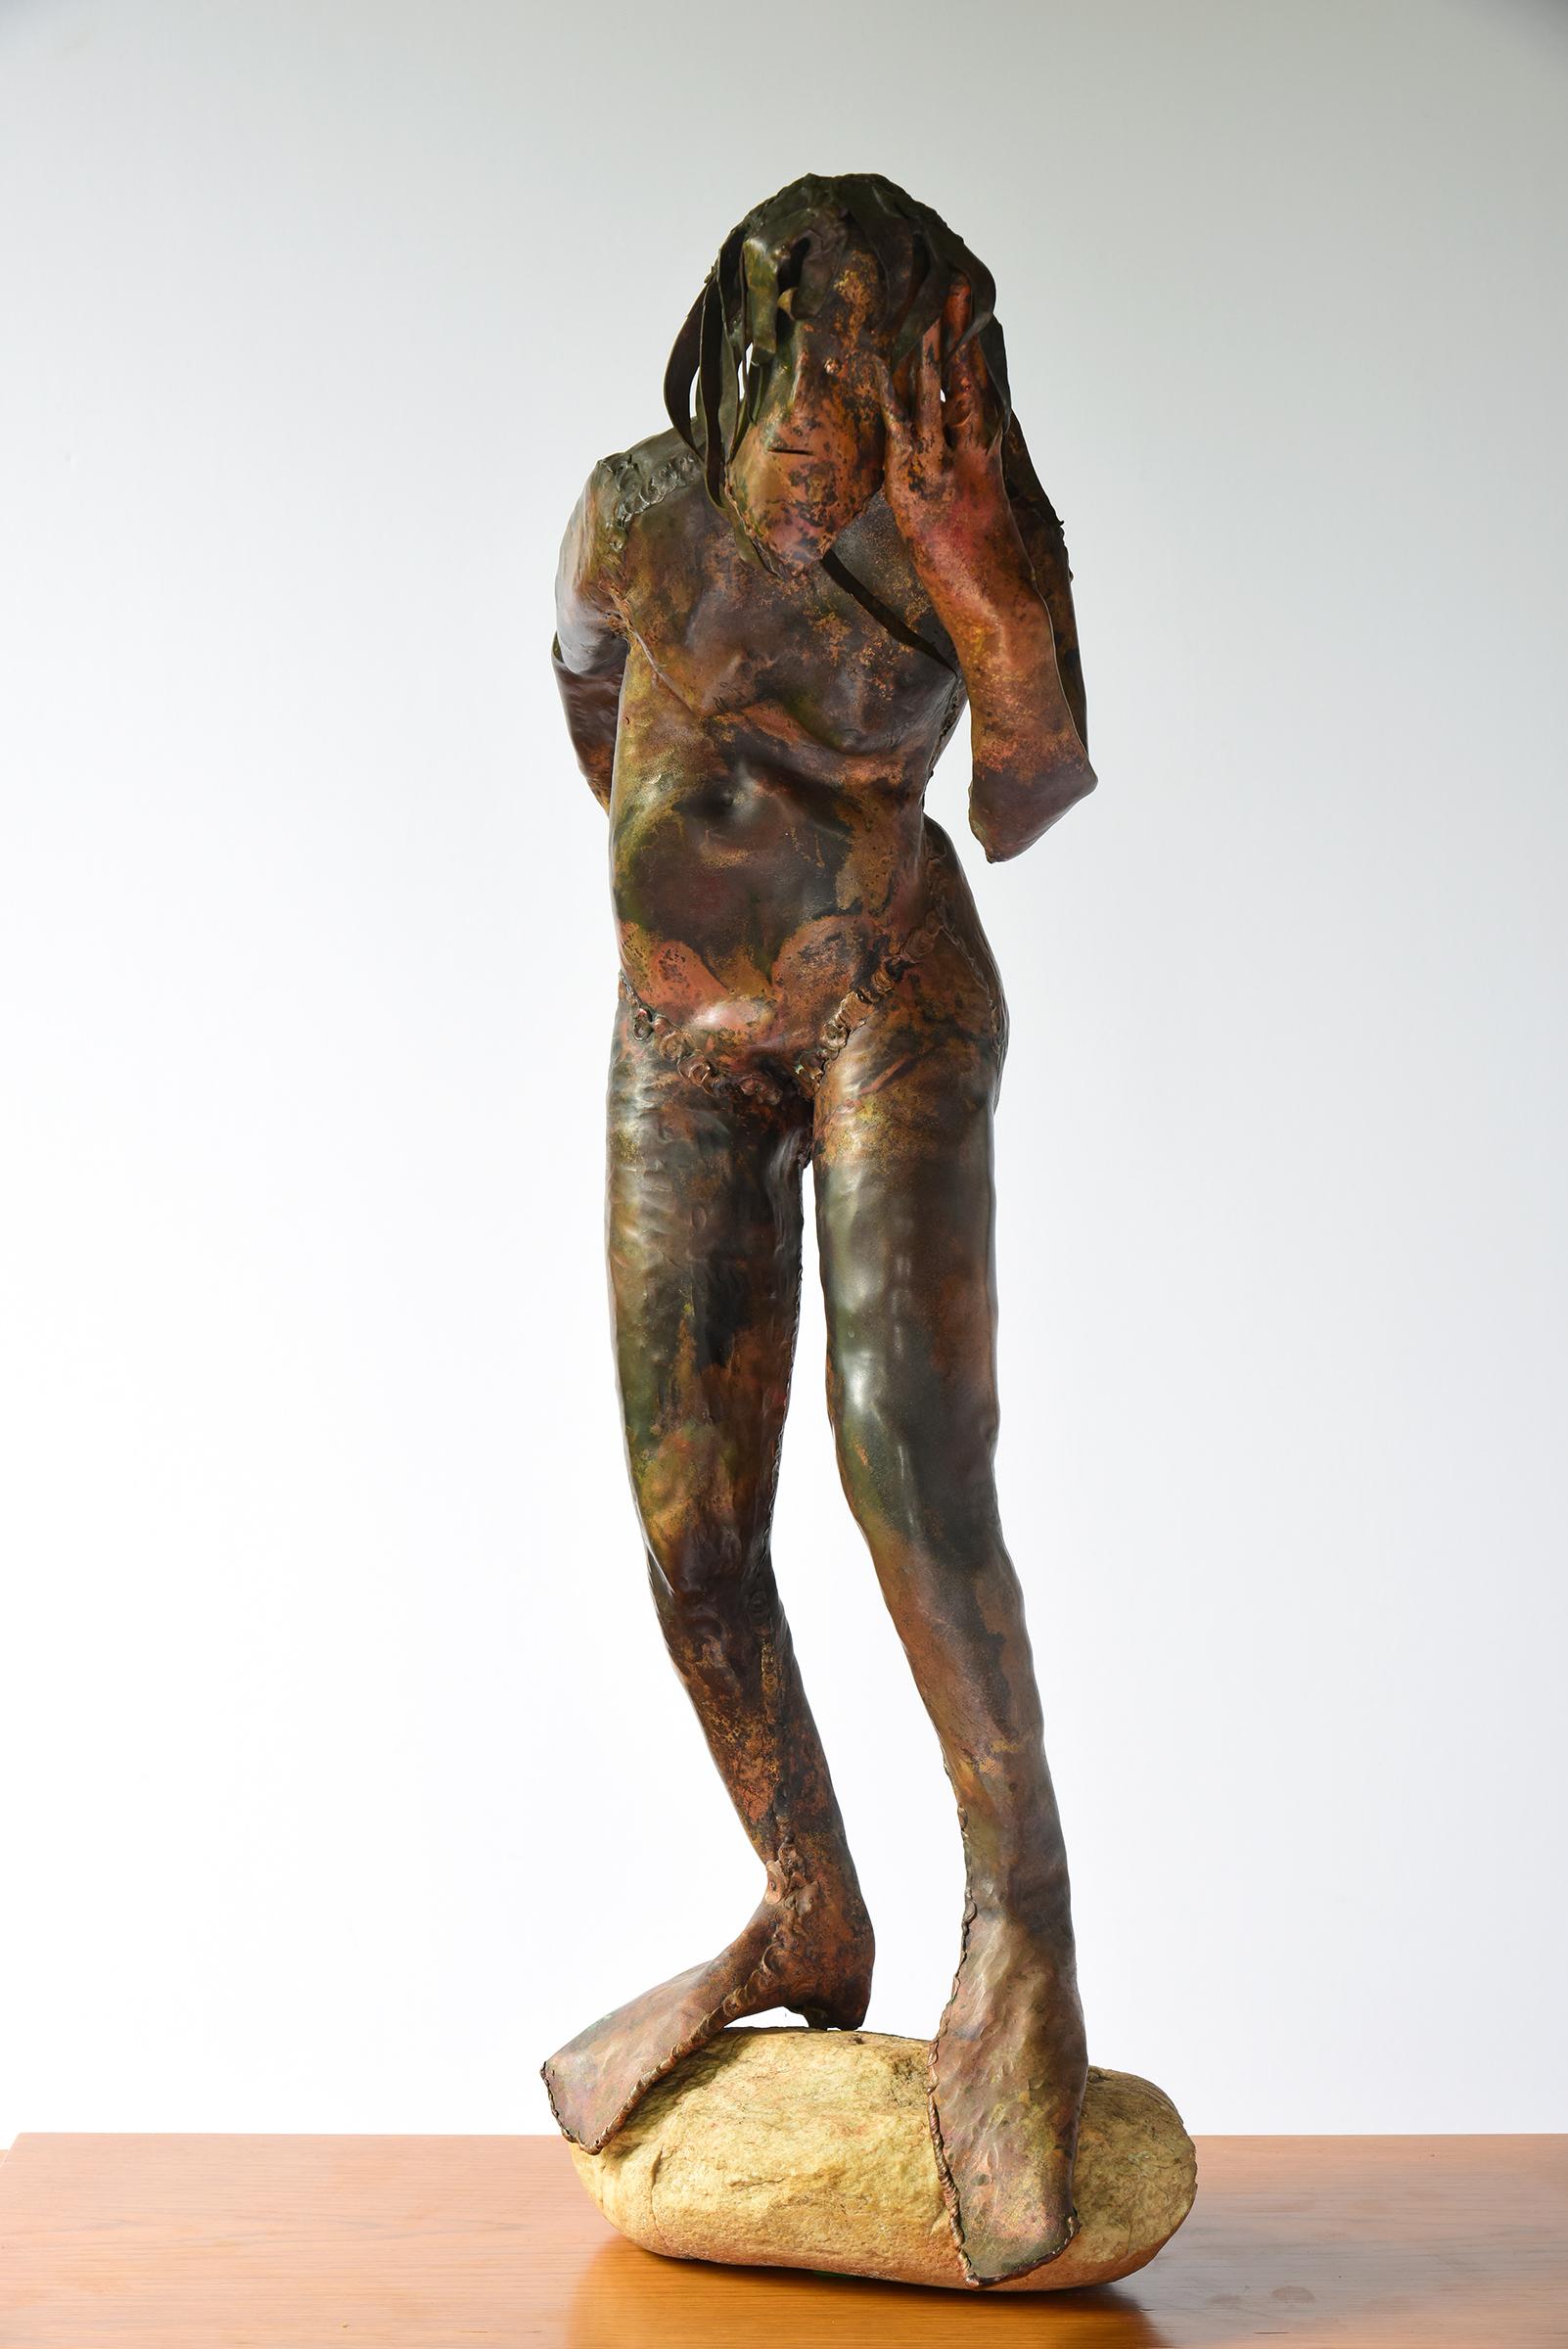 Reinhoud d'Haese Figurative Sculpture - "Ecoutez" Sculptural Mythical Figure in Copper & Stone & Signed